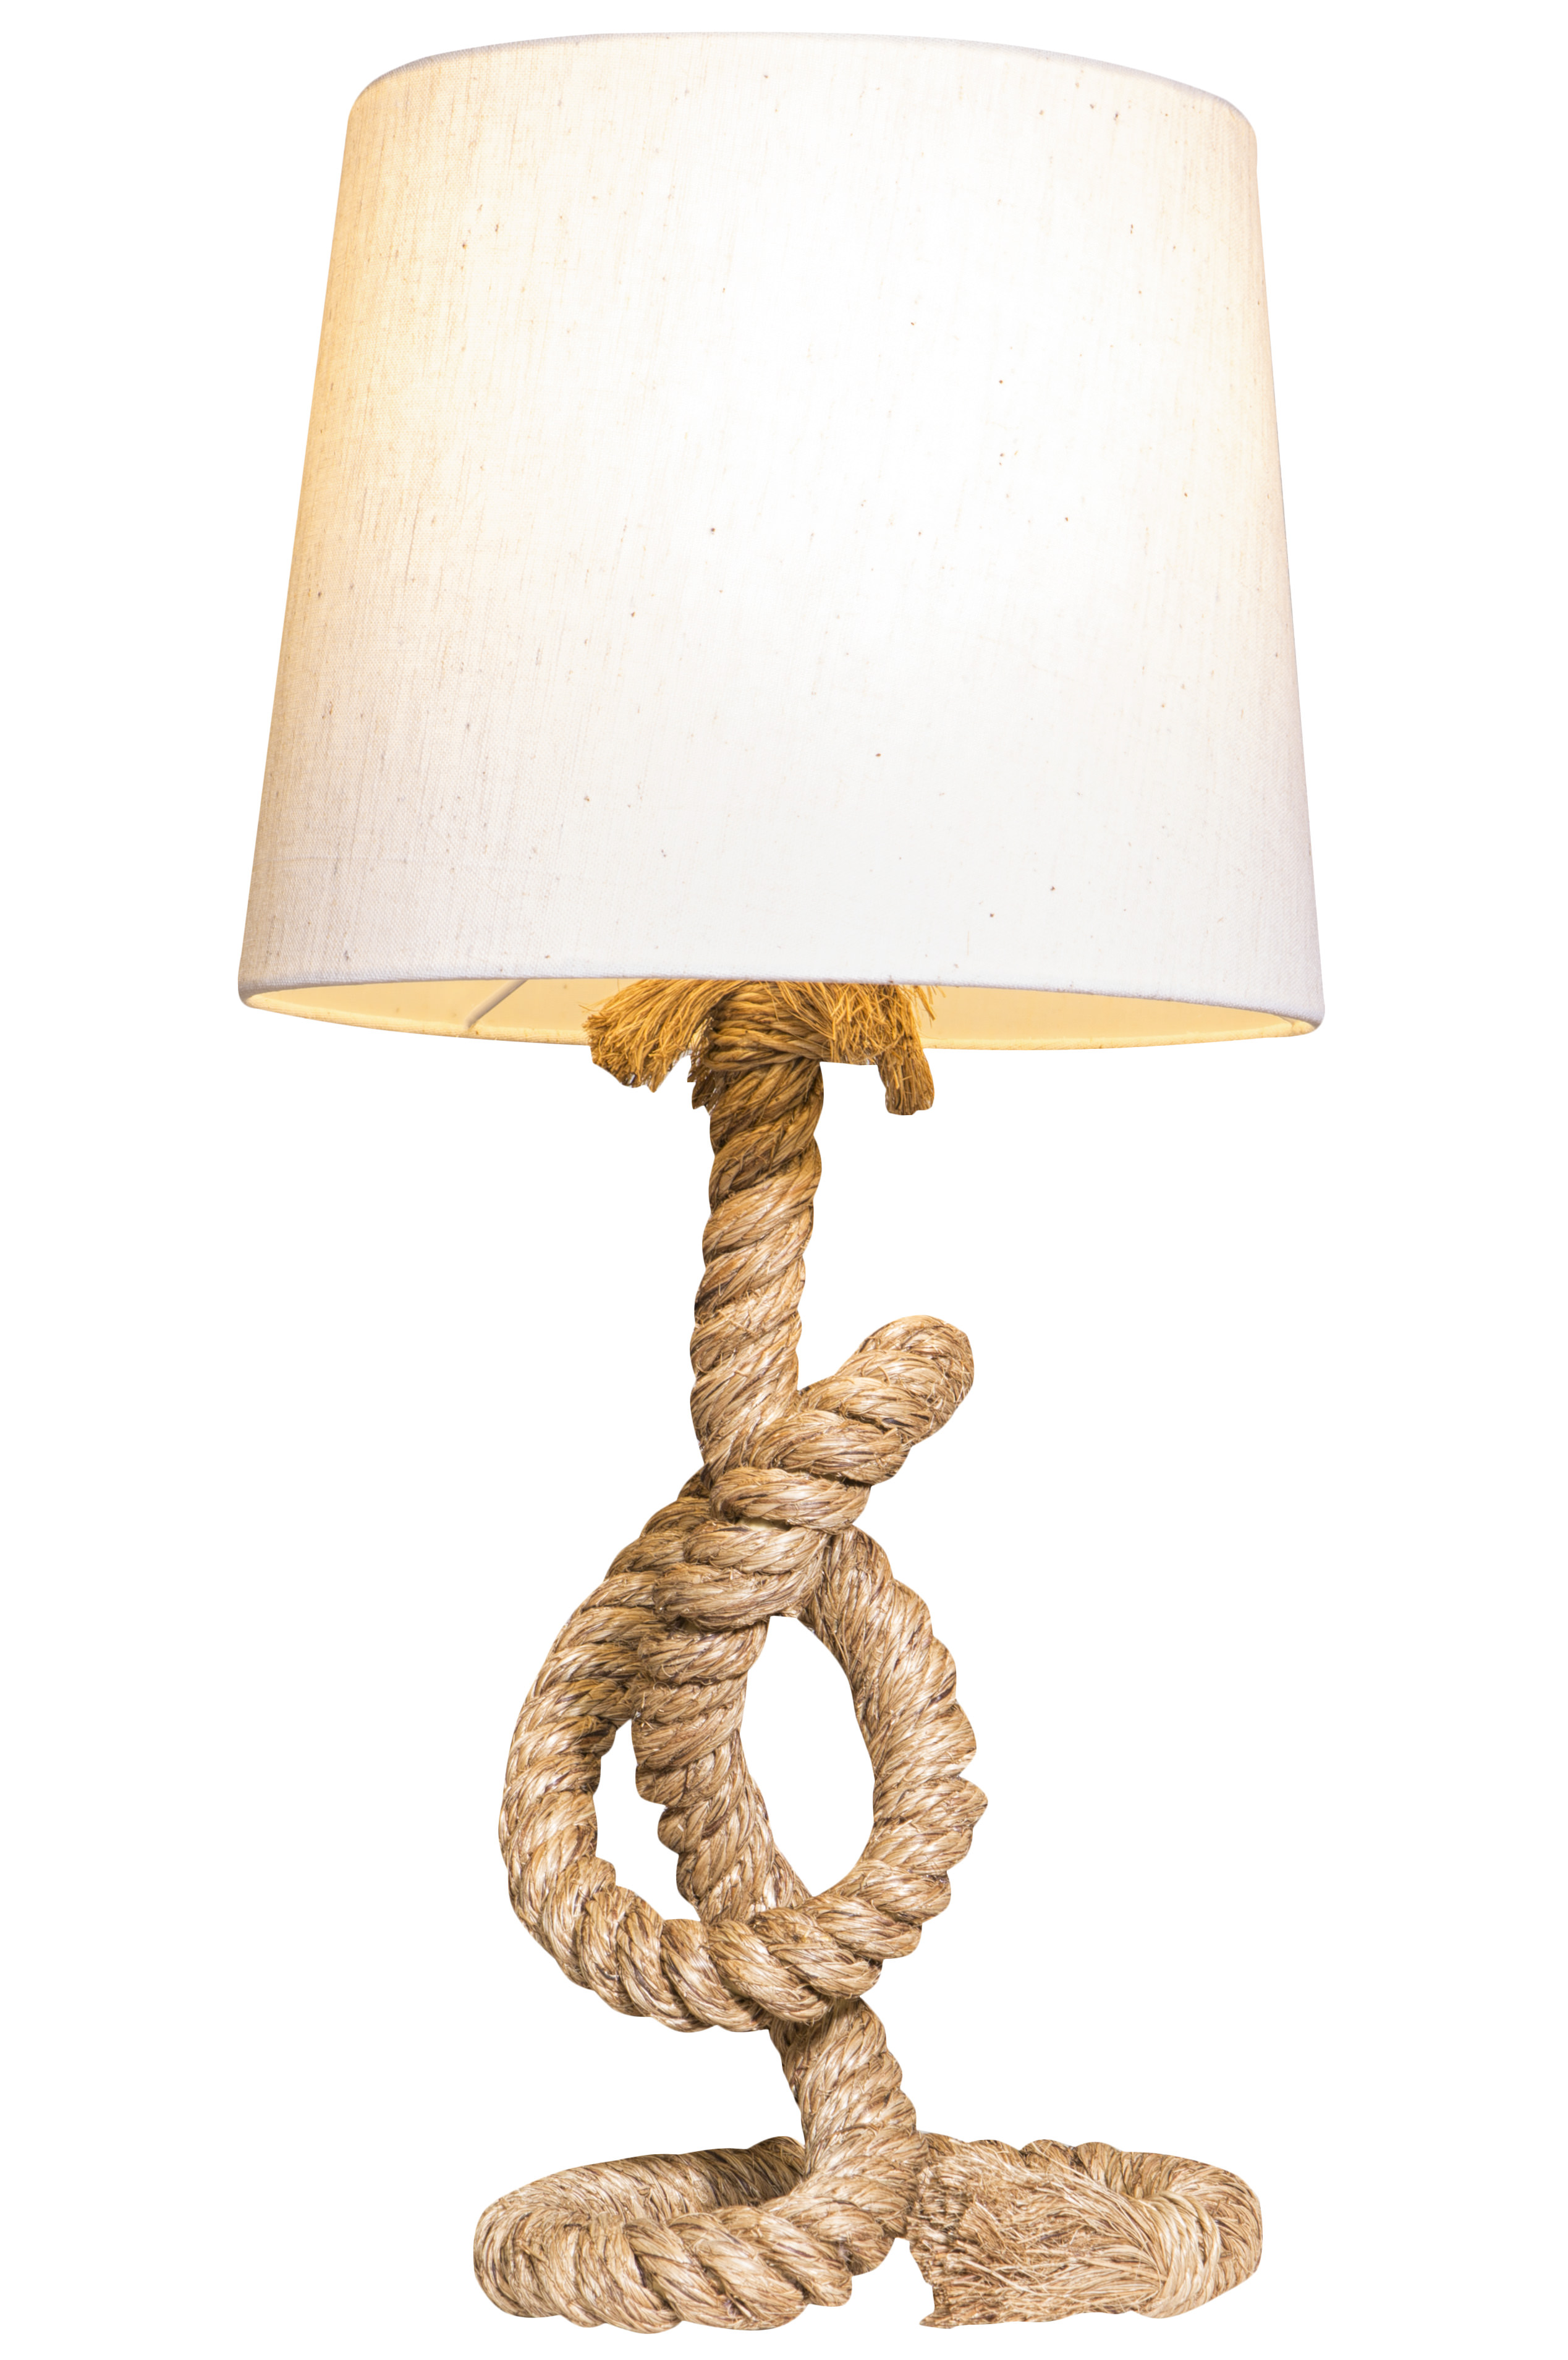 Tau Holz & Messing Lampe perfekt für die maritime Dekoration 